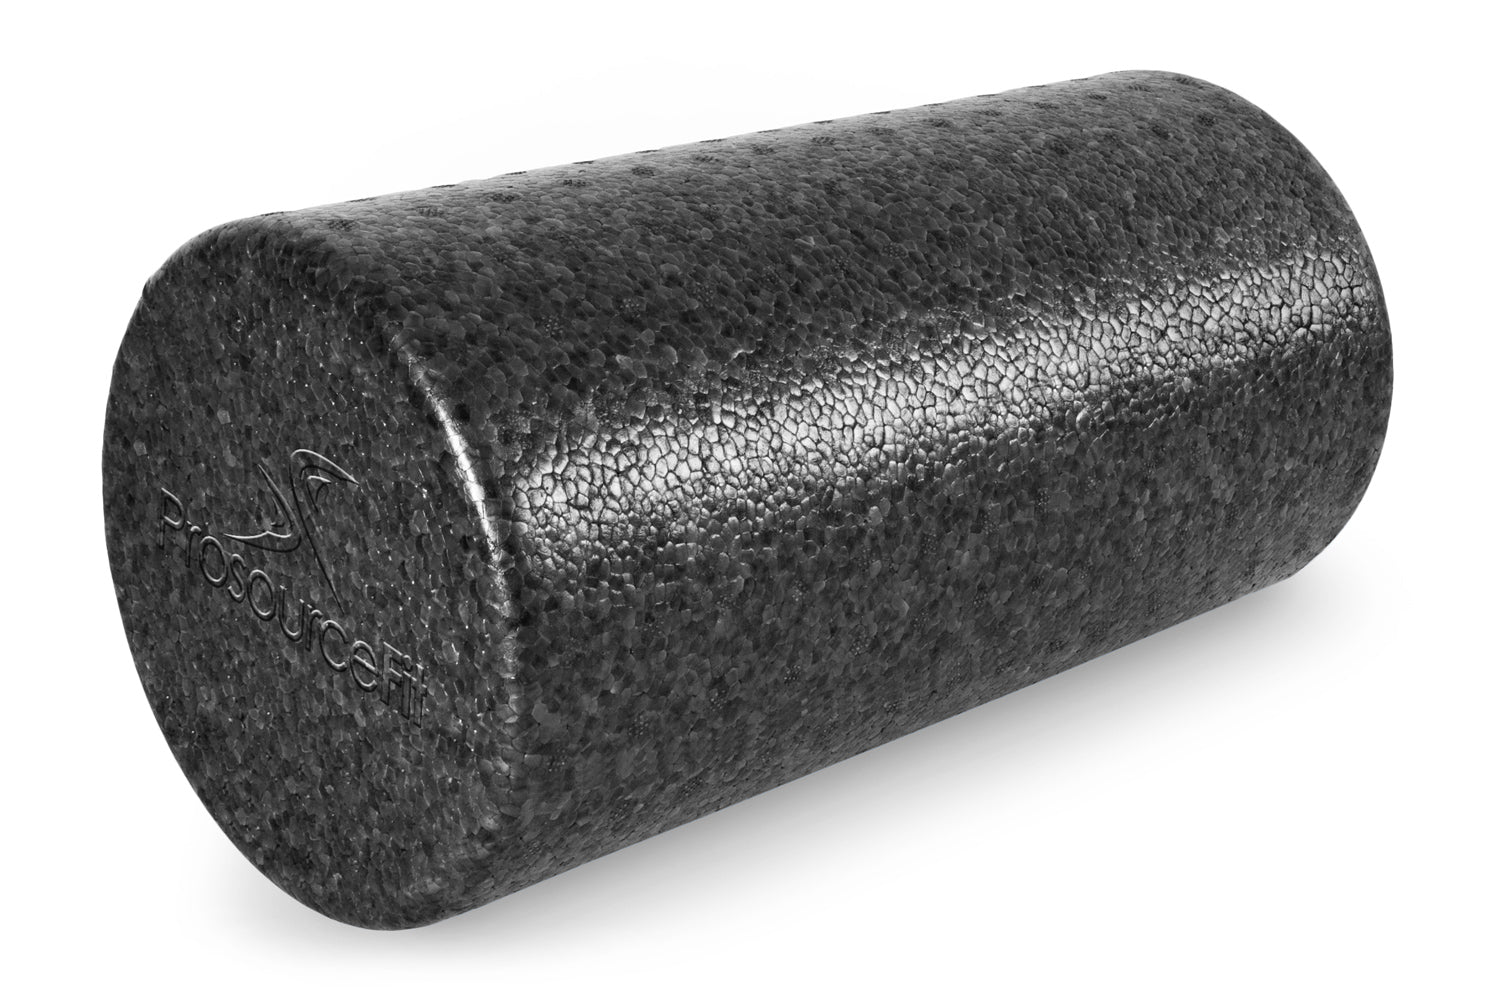 12 x 6 Black High Density Foam Roller